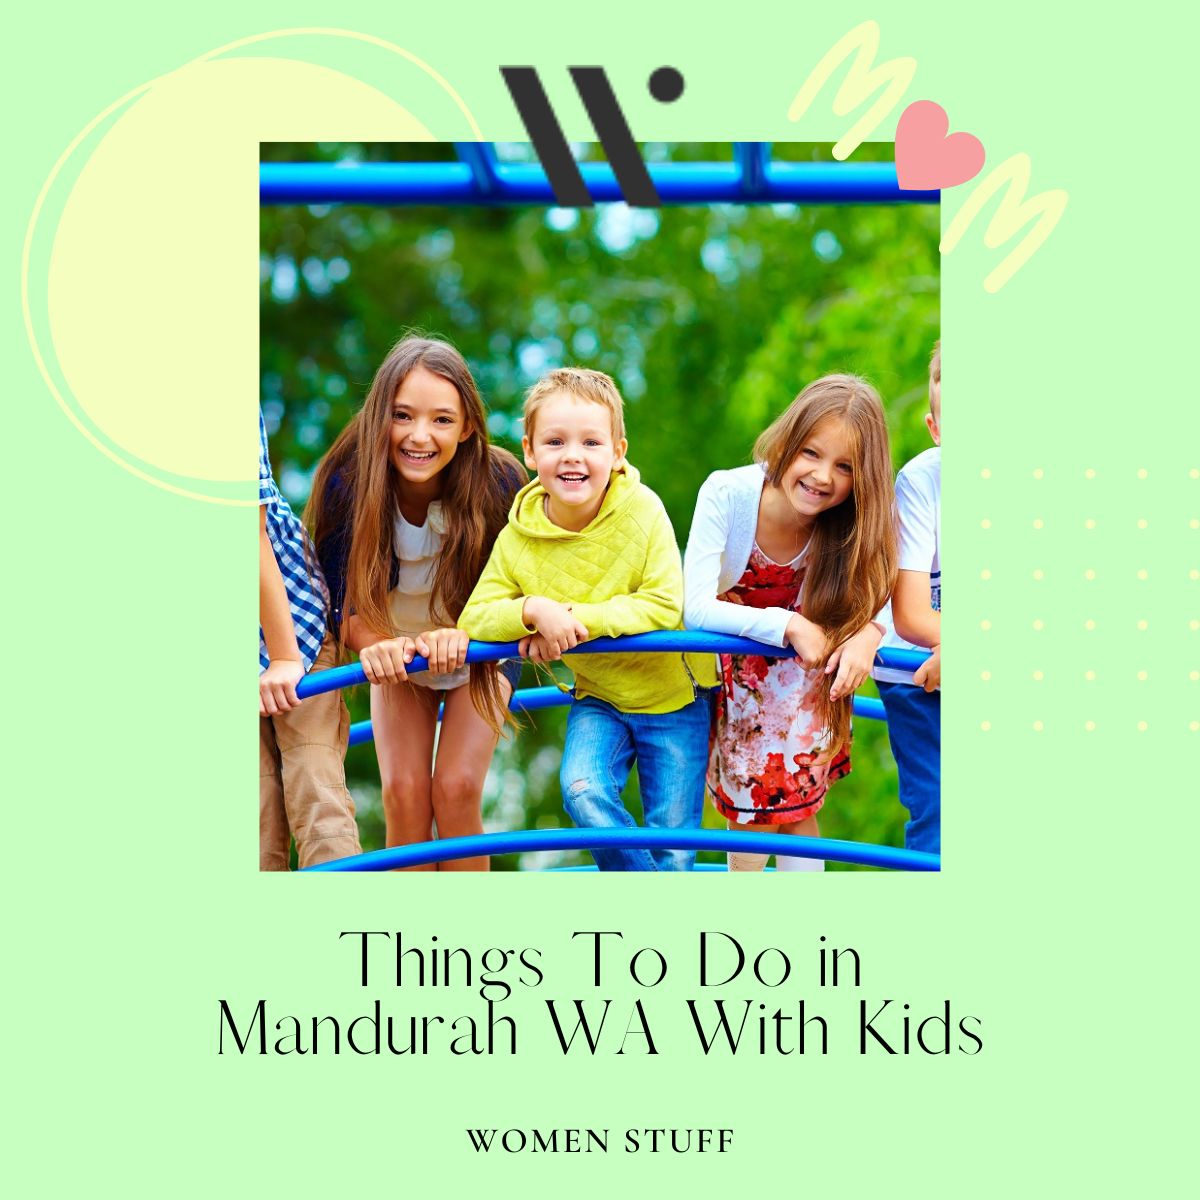 Things To Do in Mandurah WA With Kids Banner Image